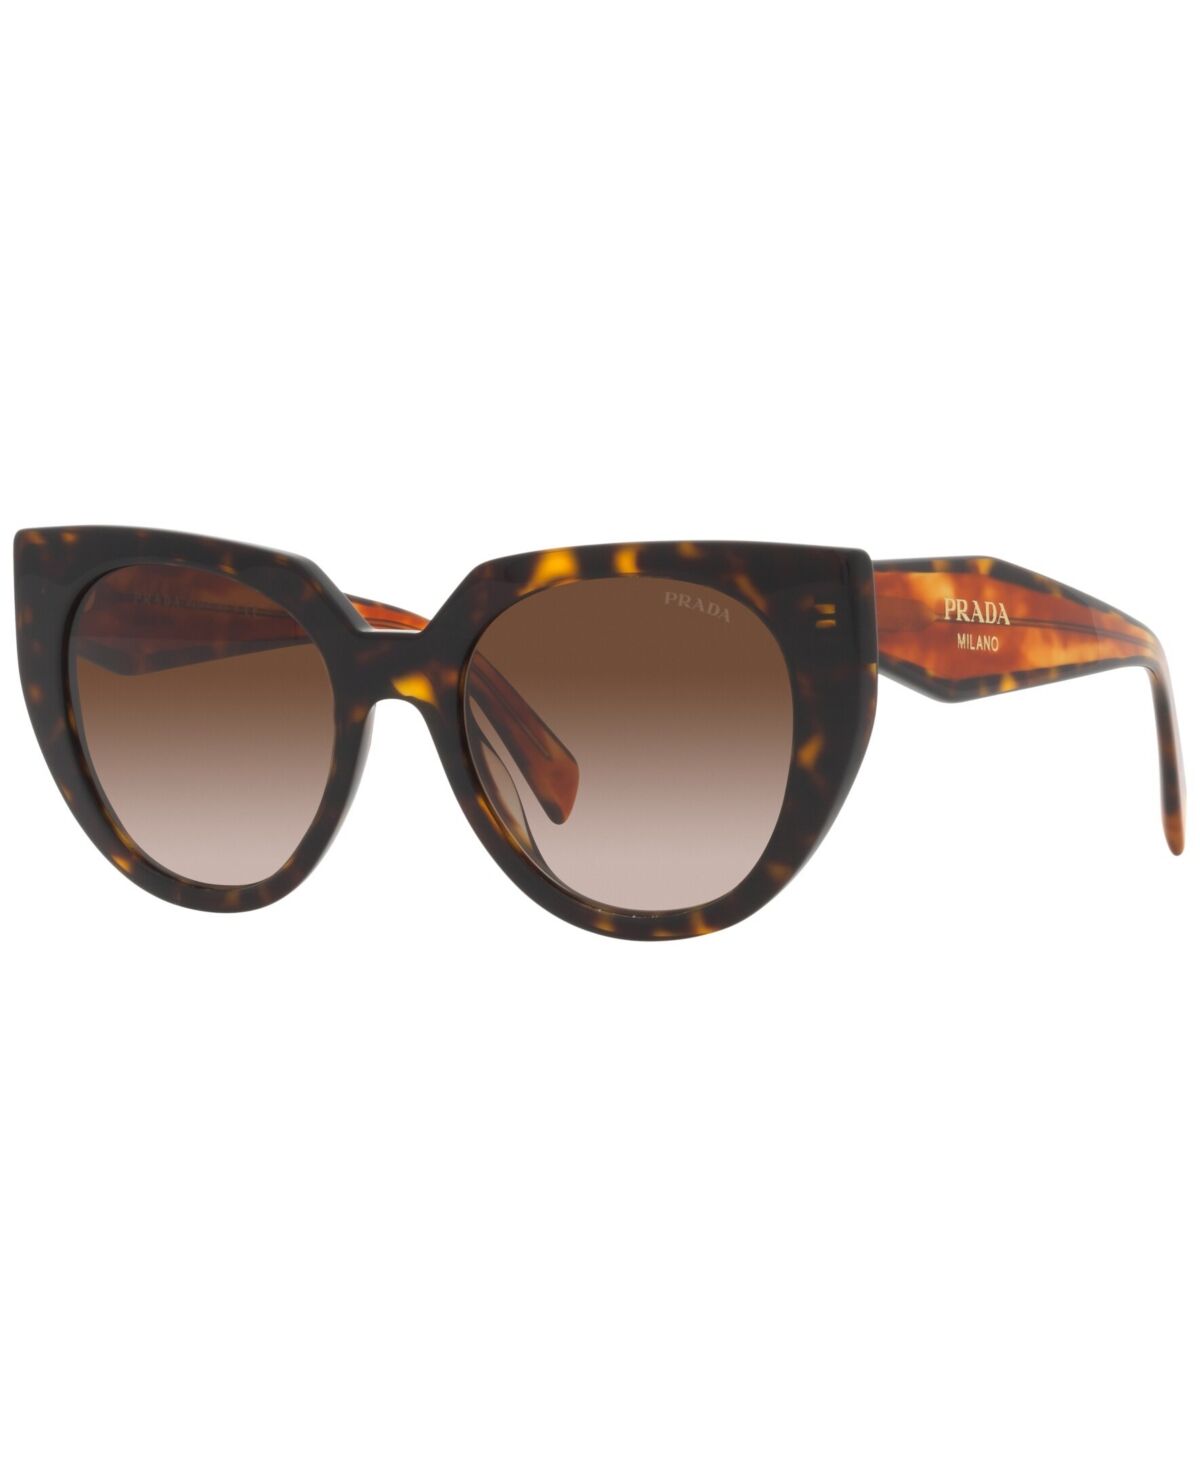 Prada Women's Sunglasses, Pr 14WS - Tortoise